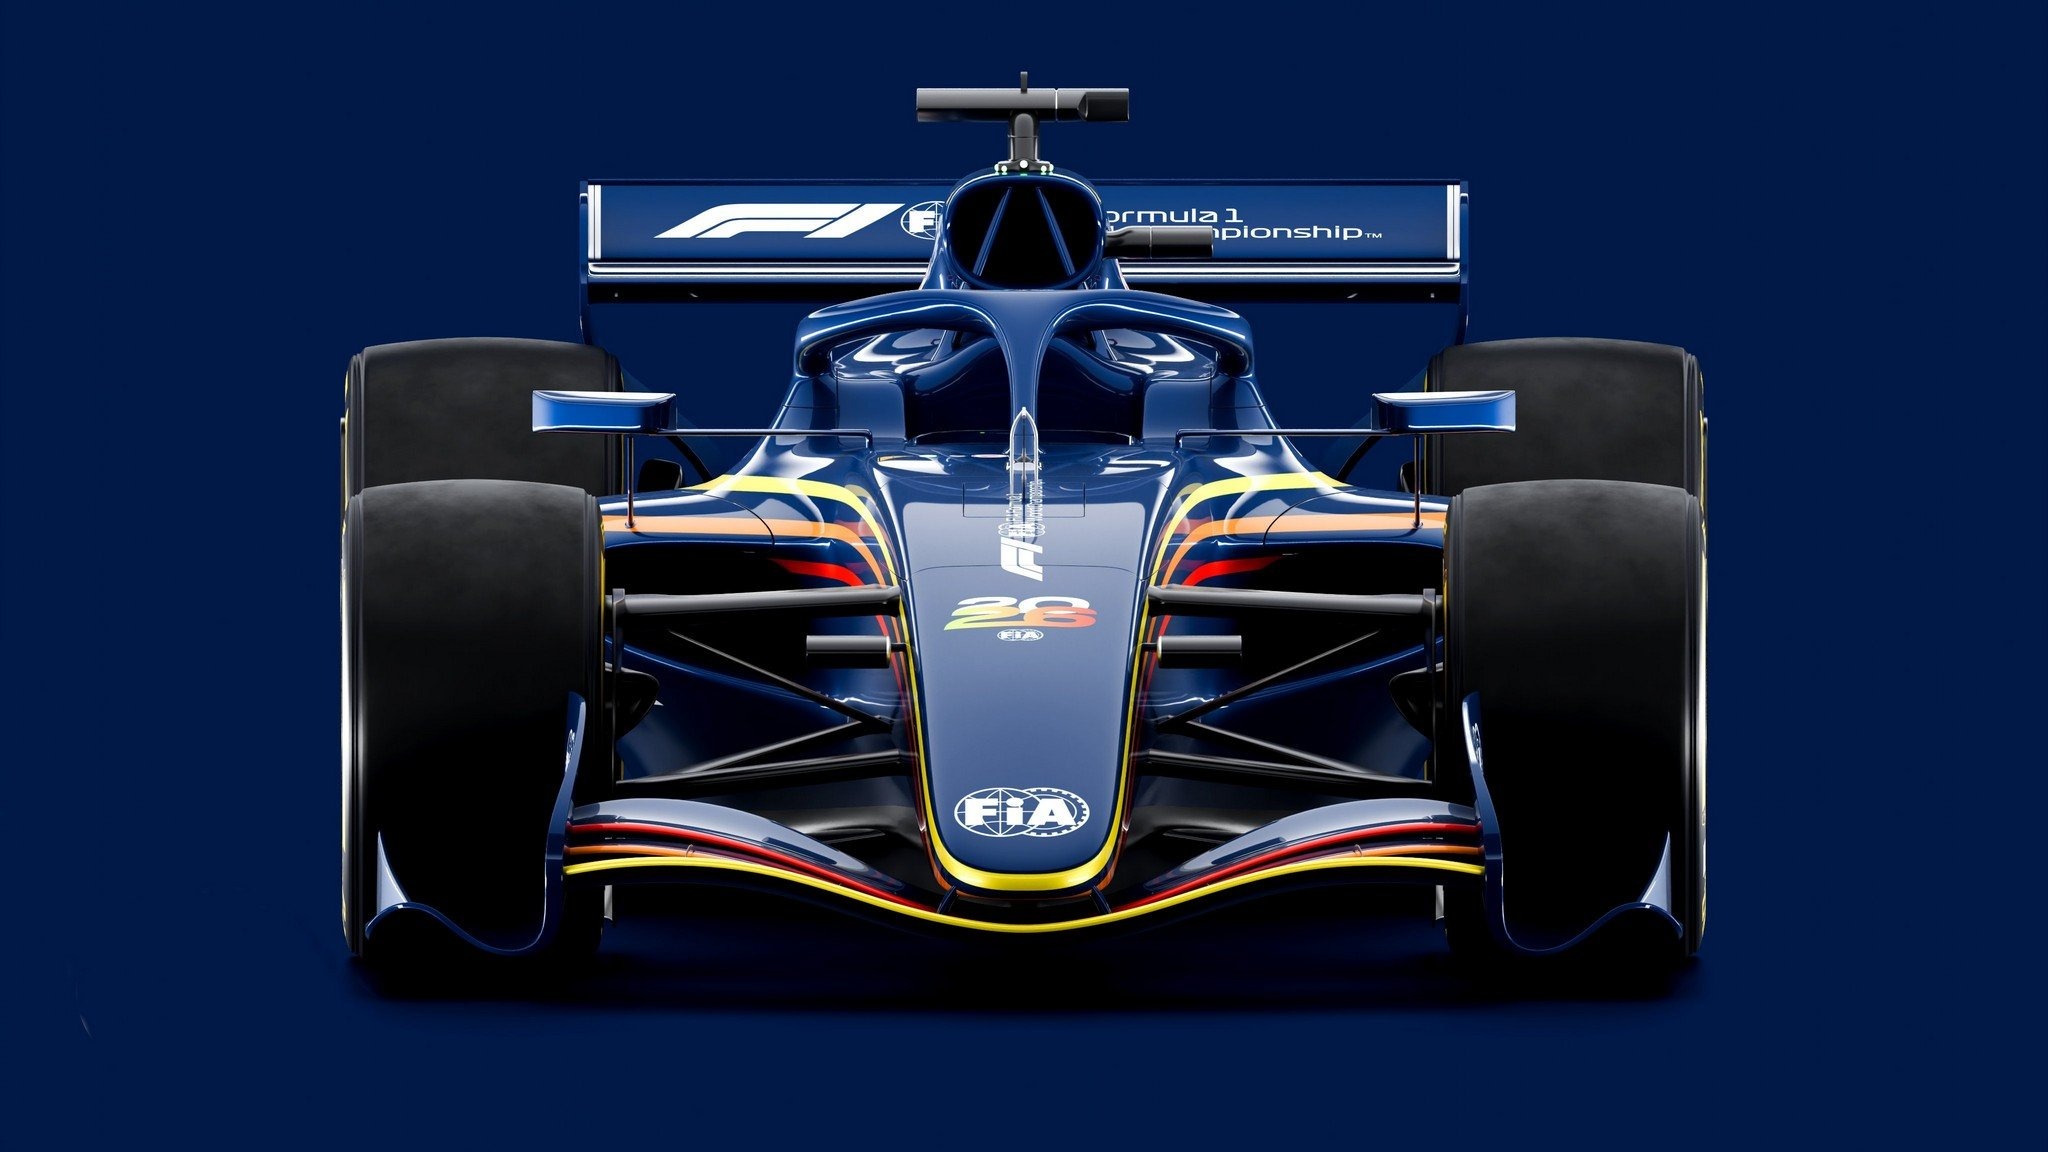 Formula 1 2026